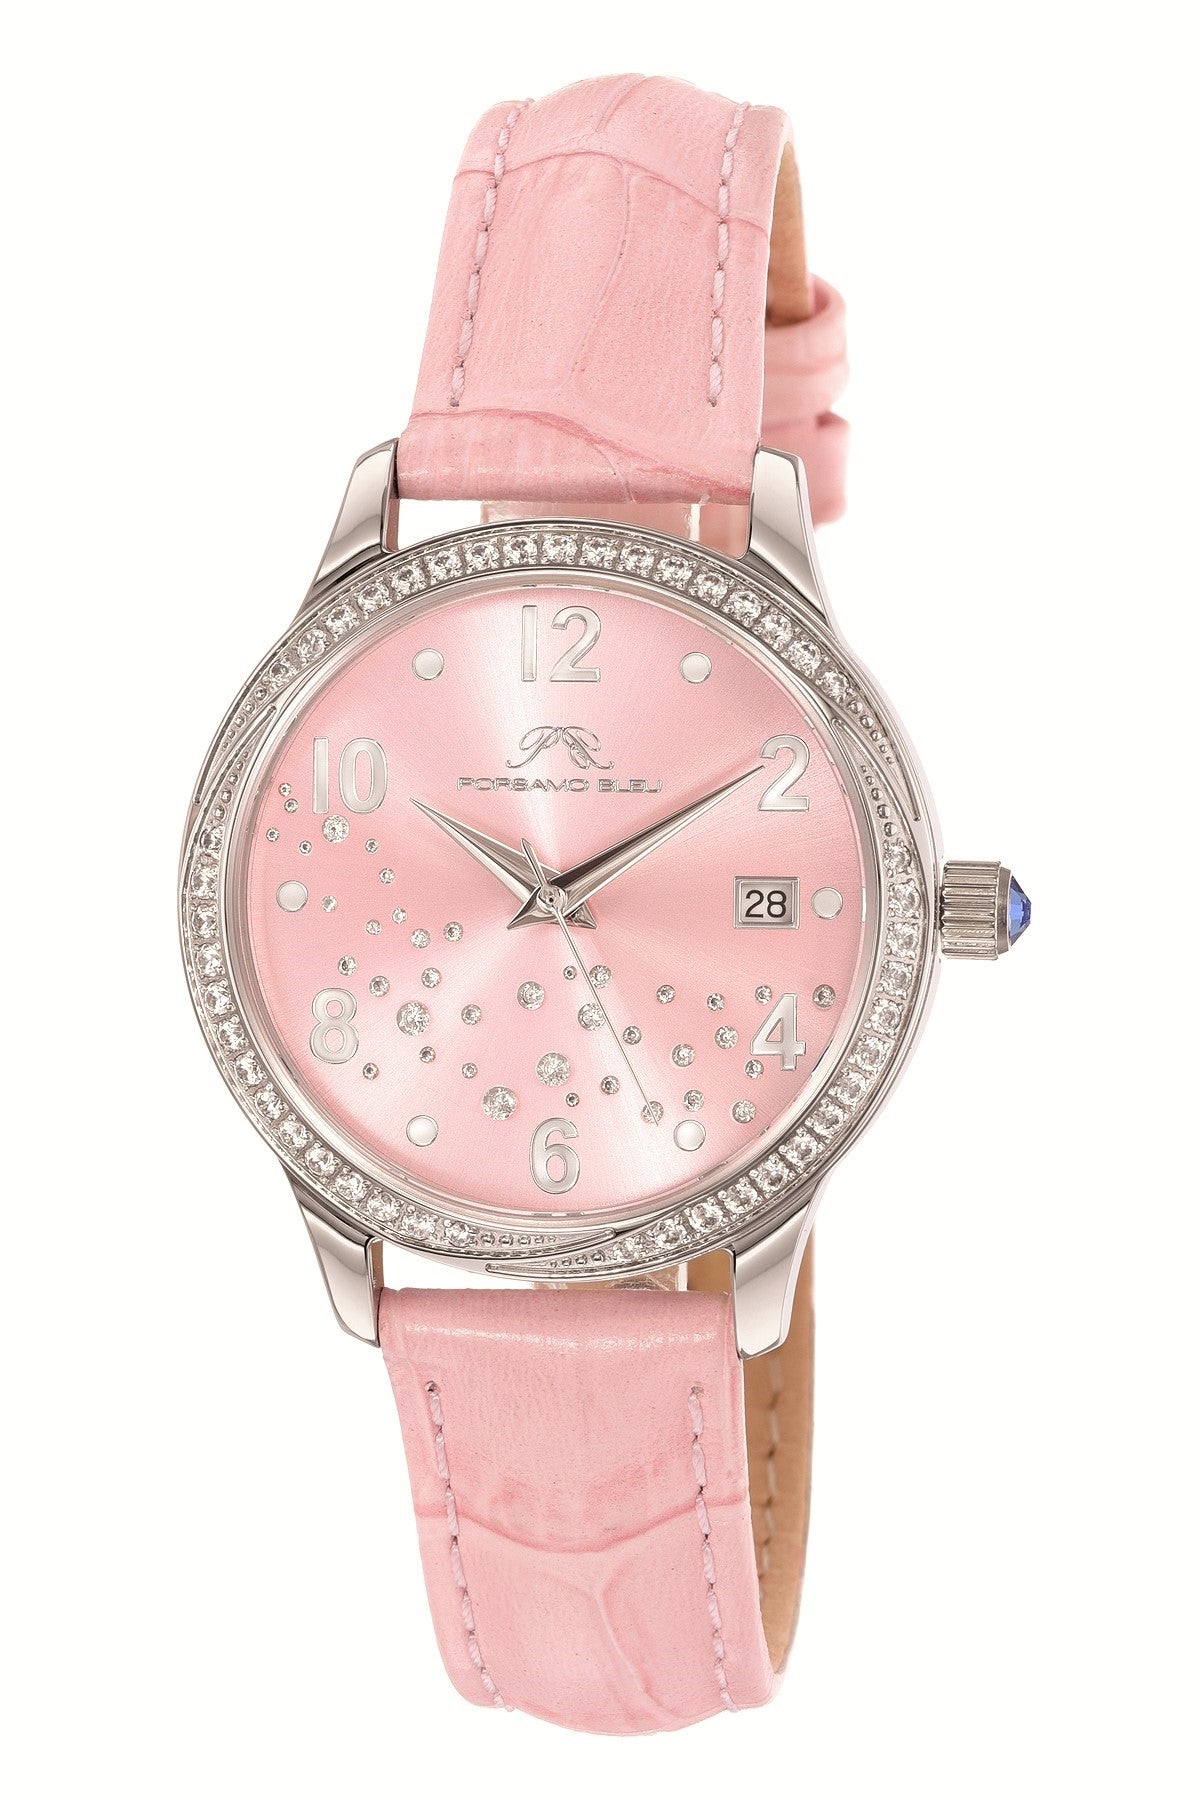 Porsamo Bleu Ruby Luxury Women's Genuine Leather Band Watch, Silver, Pink 1142BRUL